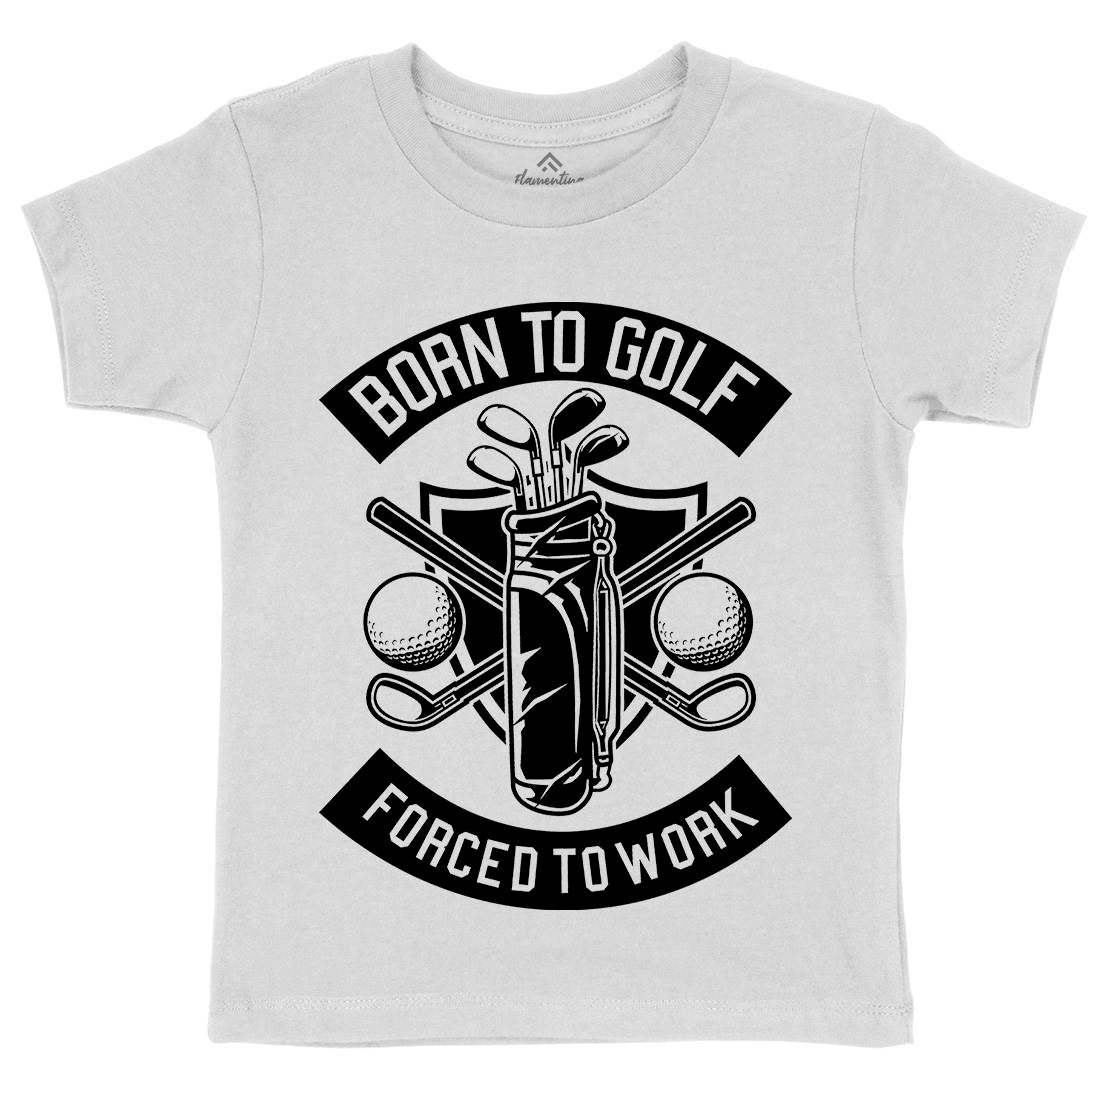 Born To Golf Kids Crew Neck T-Shirt Sport B504